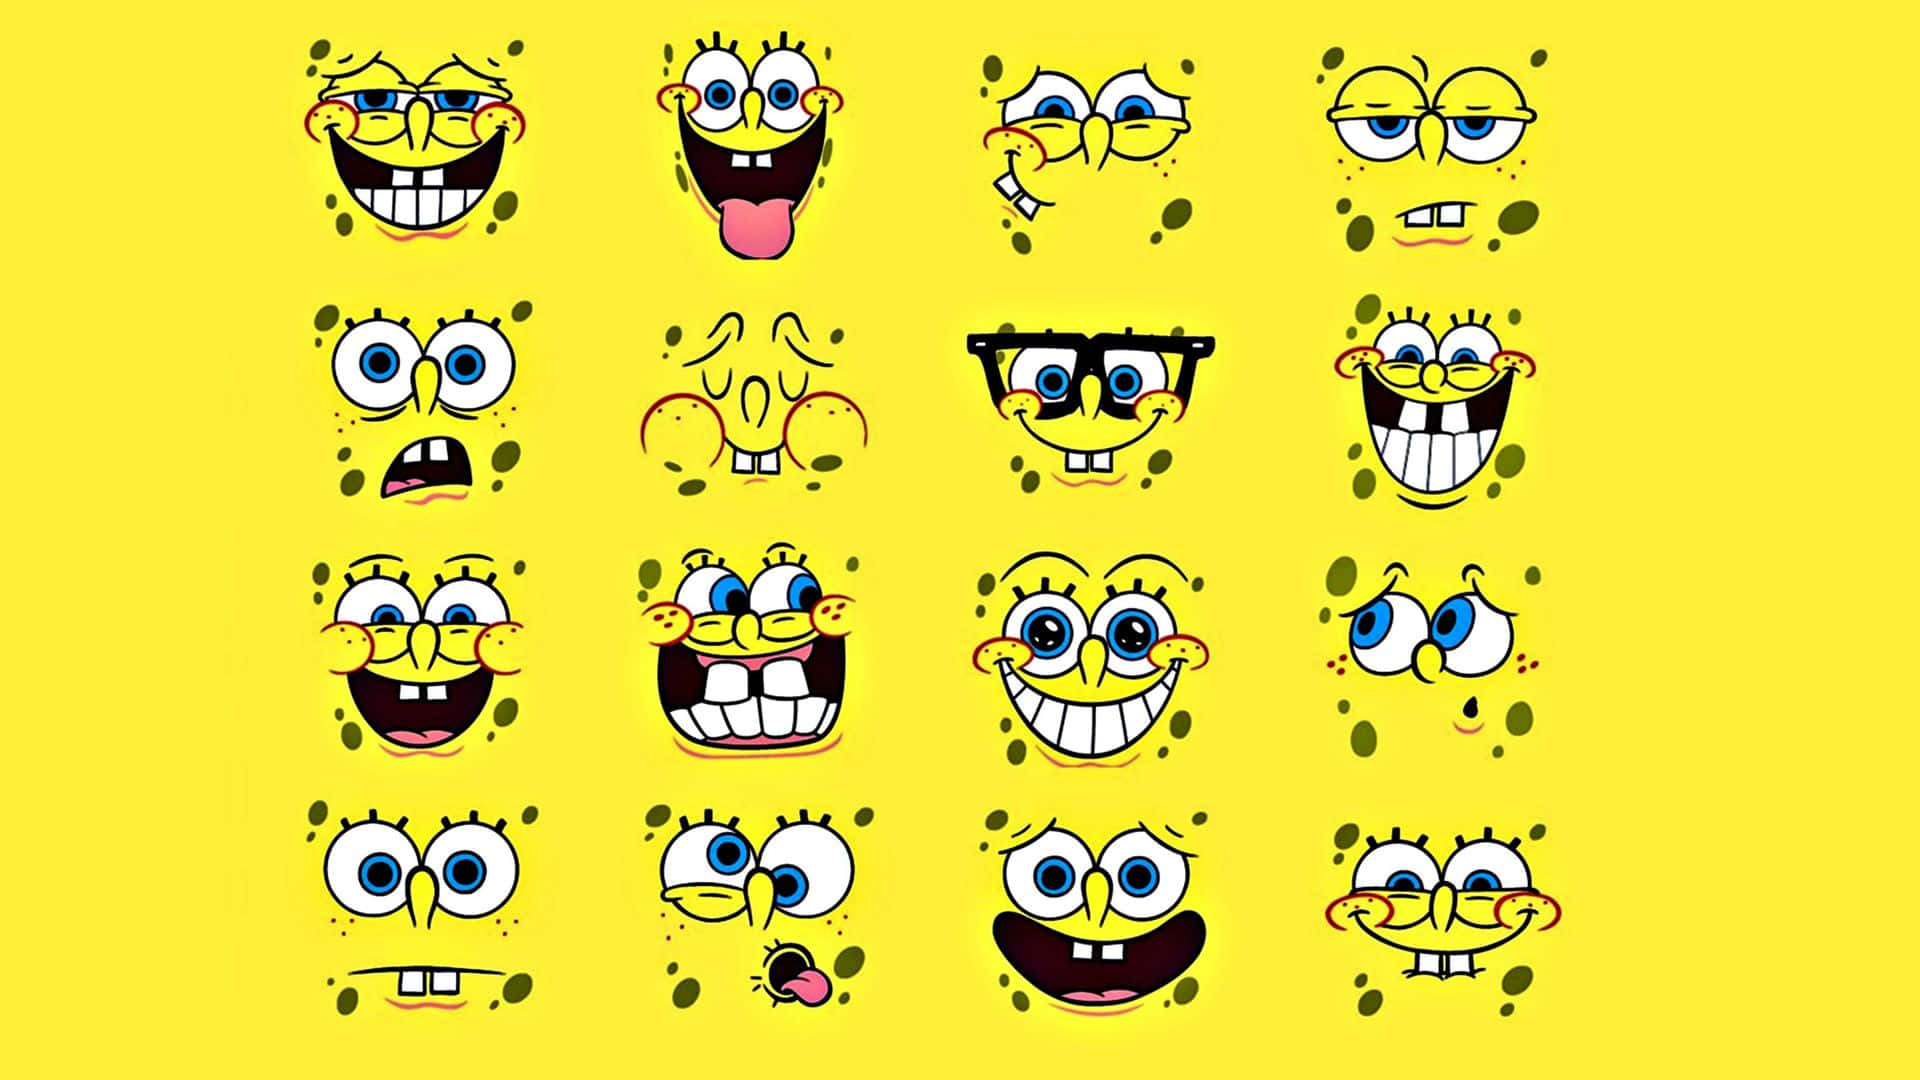 Spongebob's Desktop Ready For A Day Of Fun Wallpaper